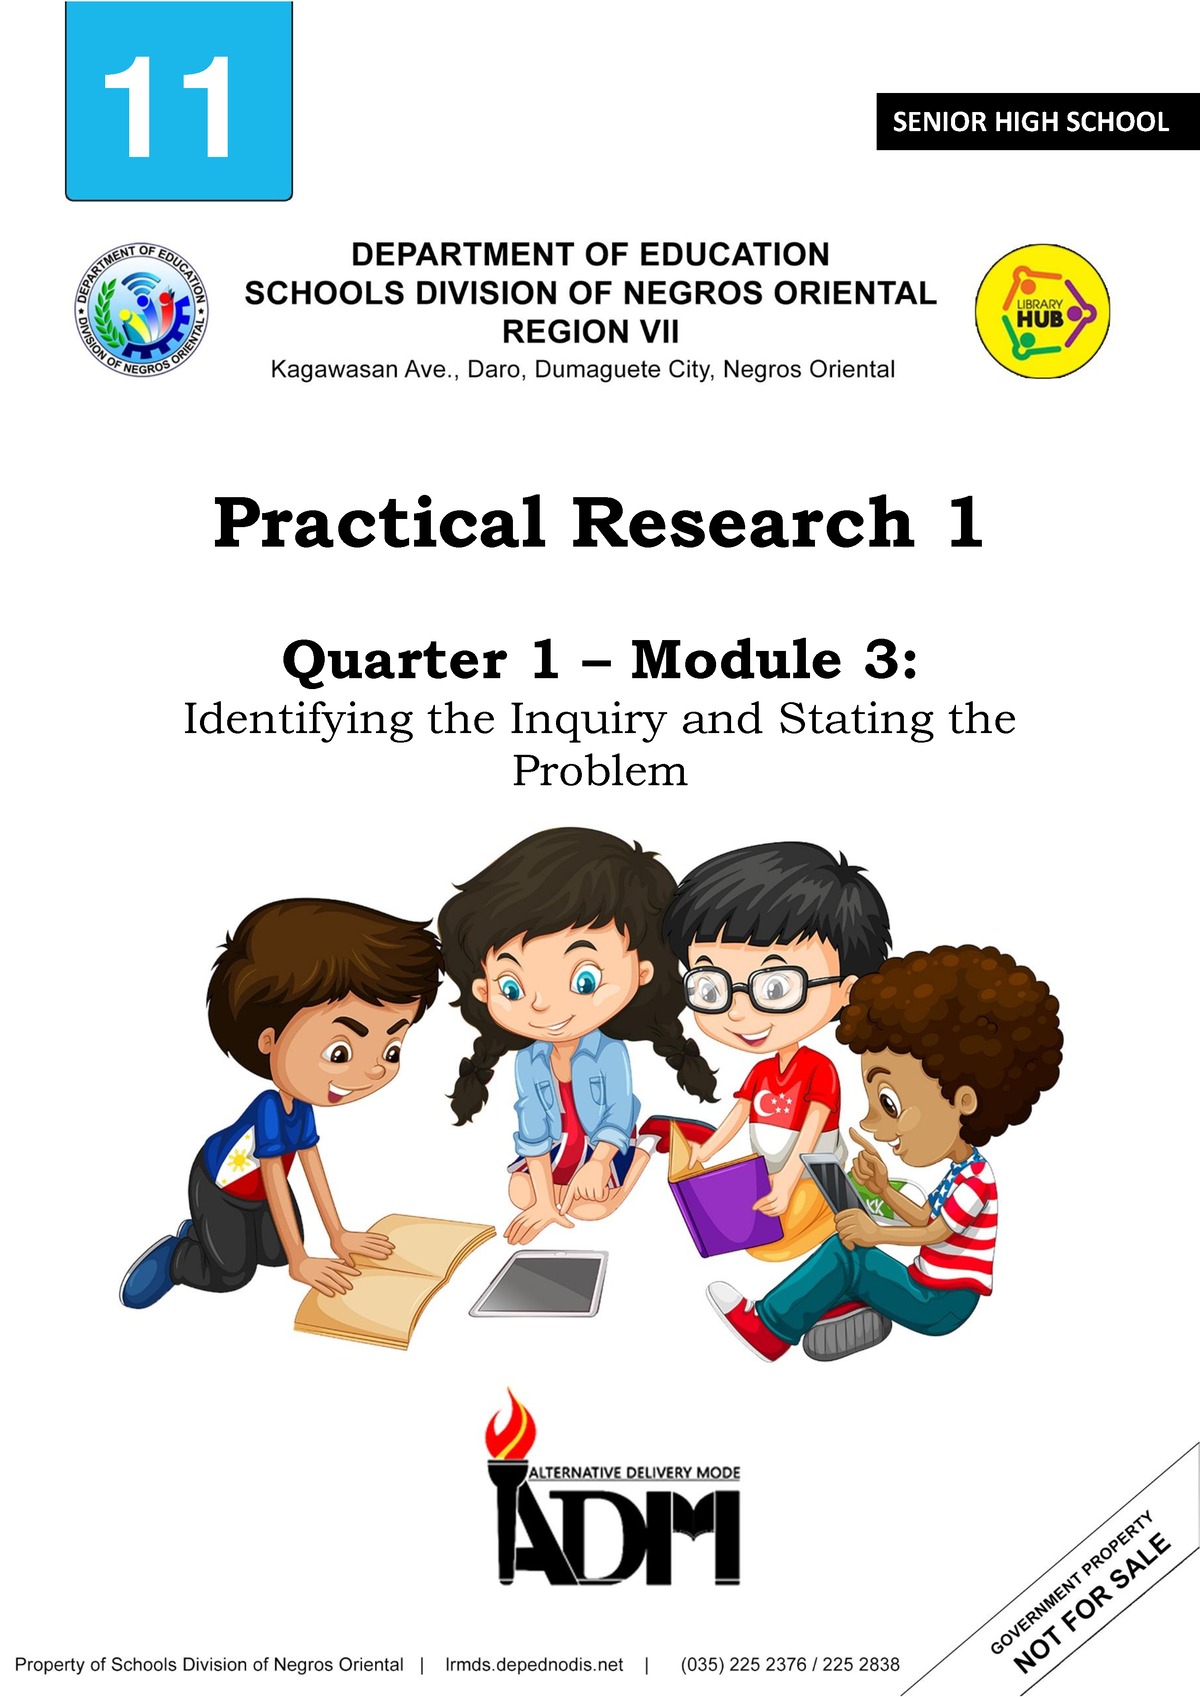 research module 1 grade 8